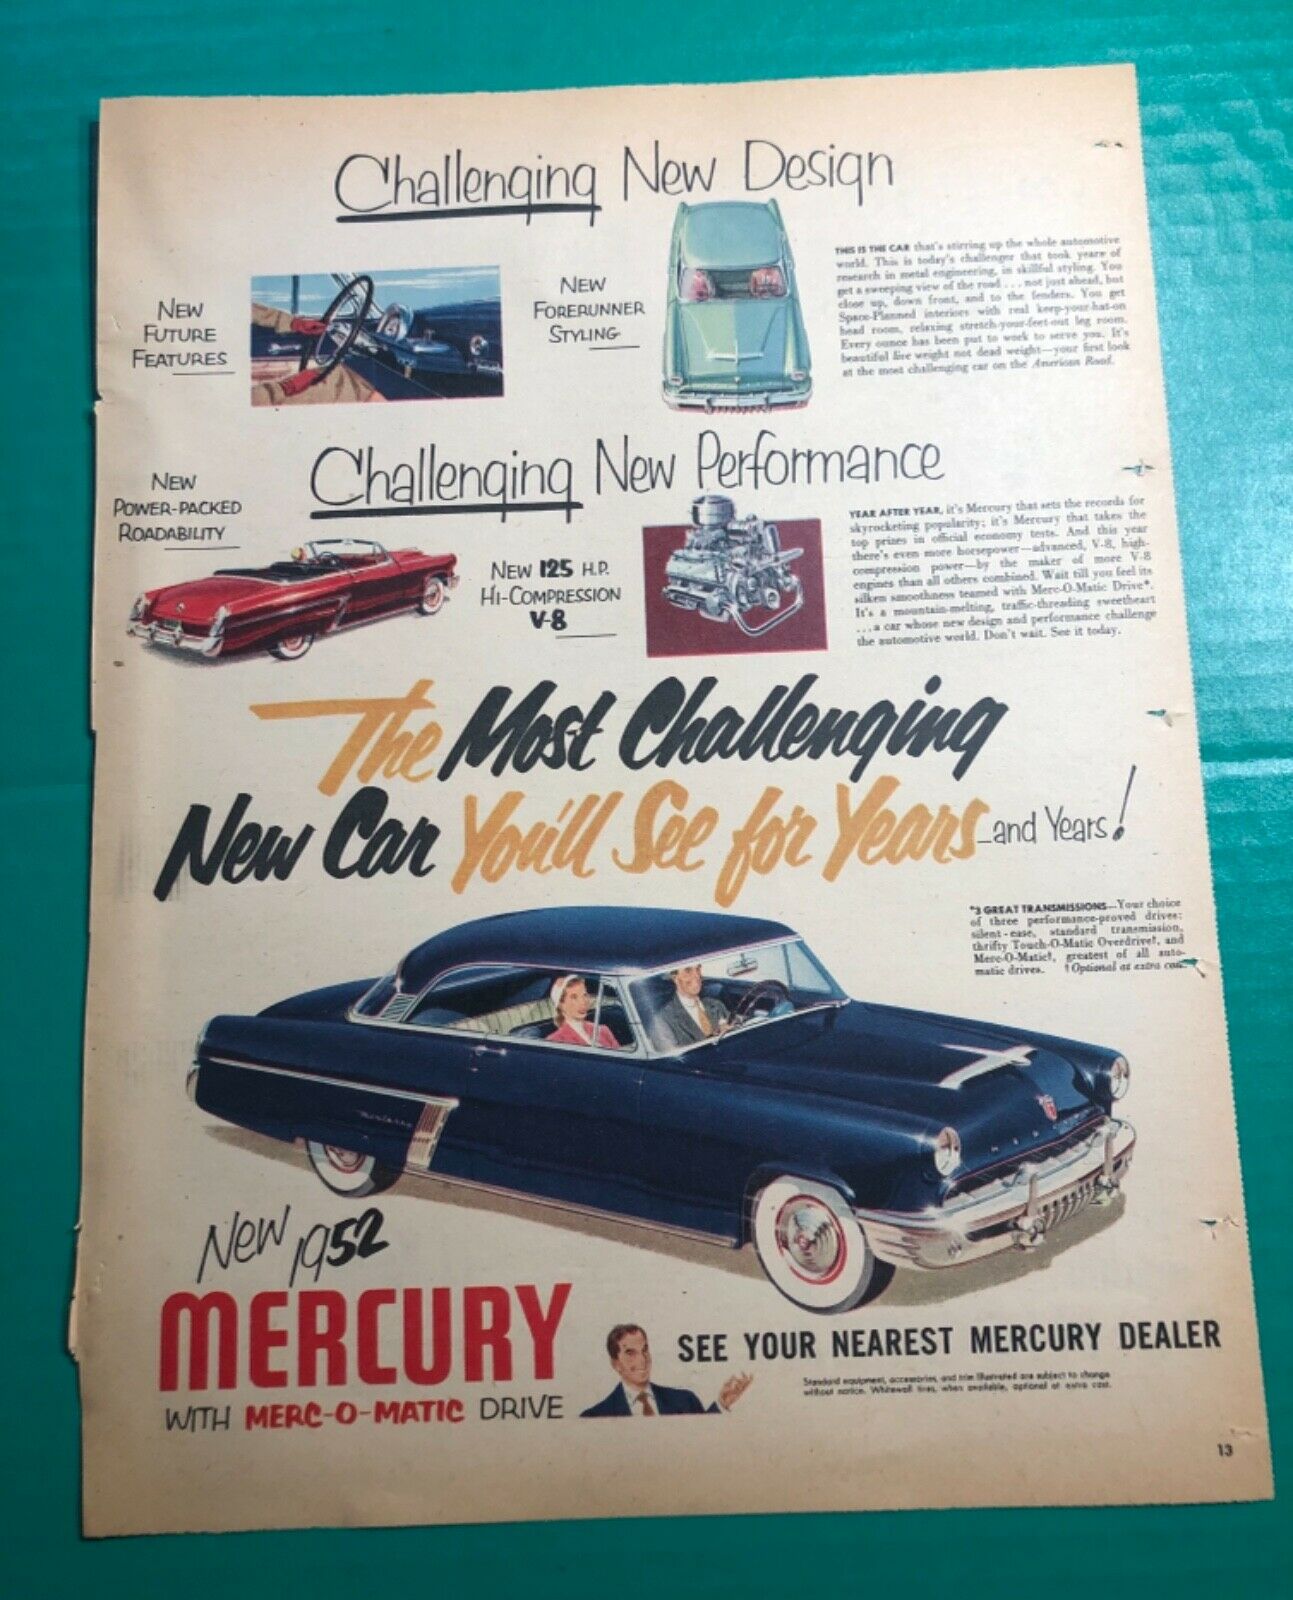 1952 Mercury Automobile Car Print Ad “with Merc-o-matic Drive” 13.5x10.5”